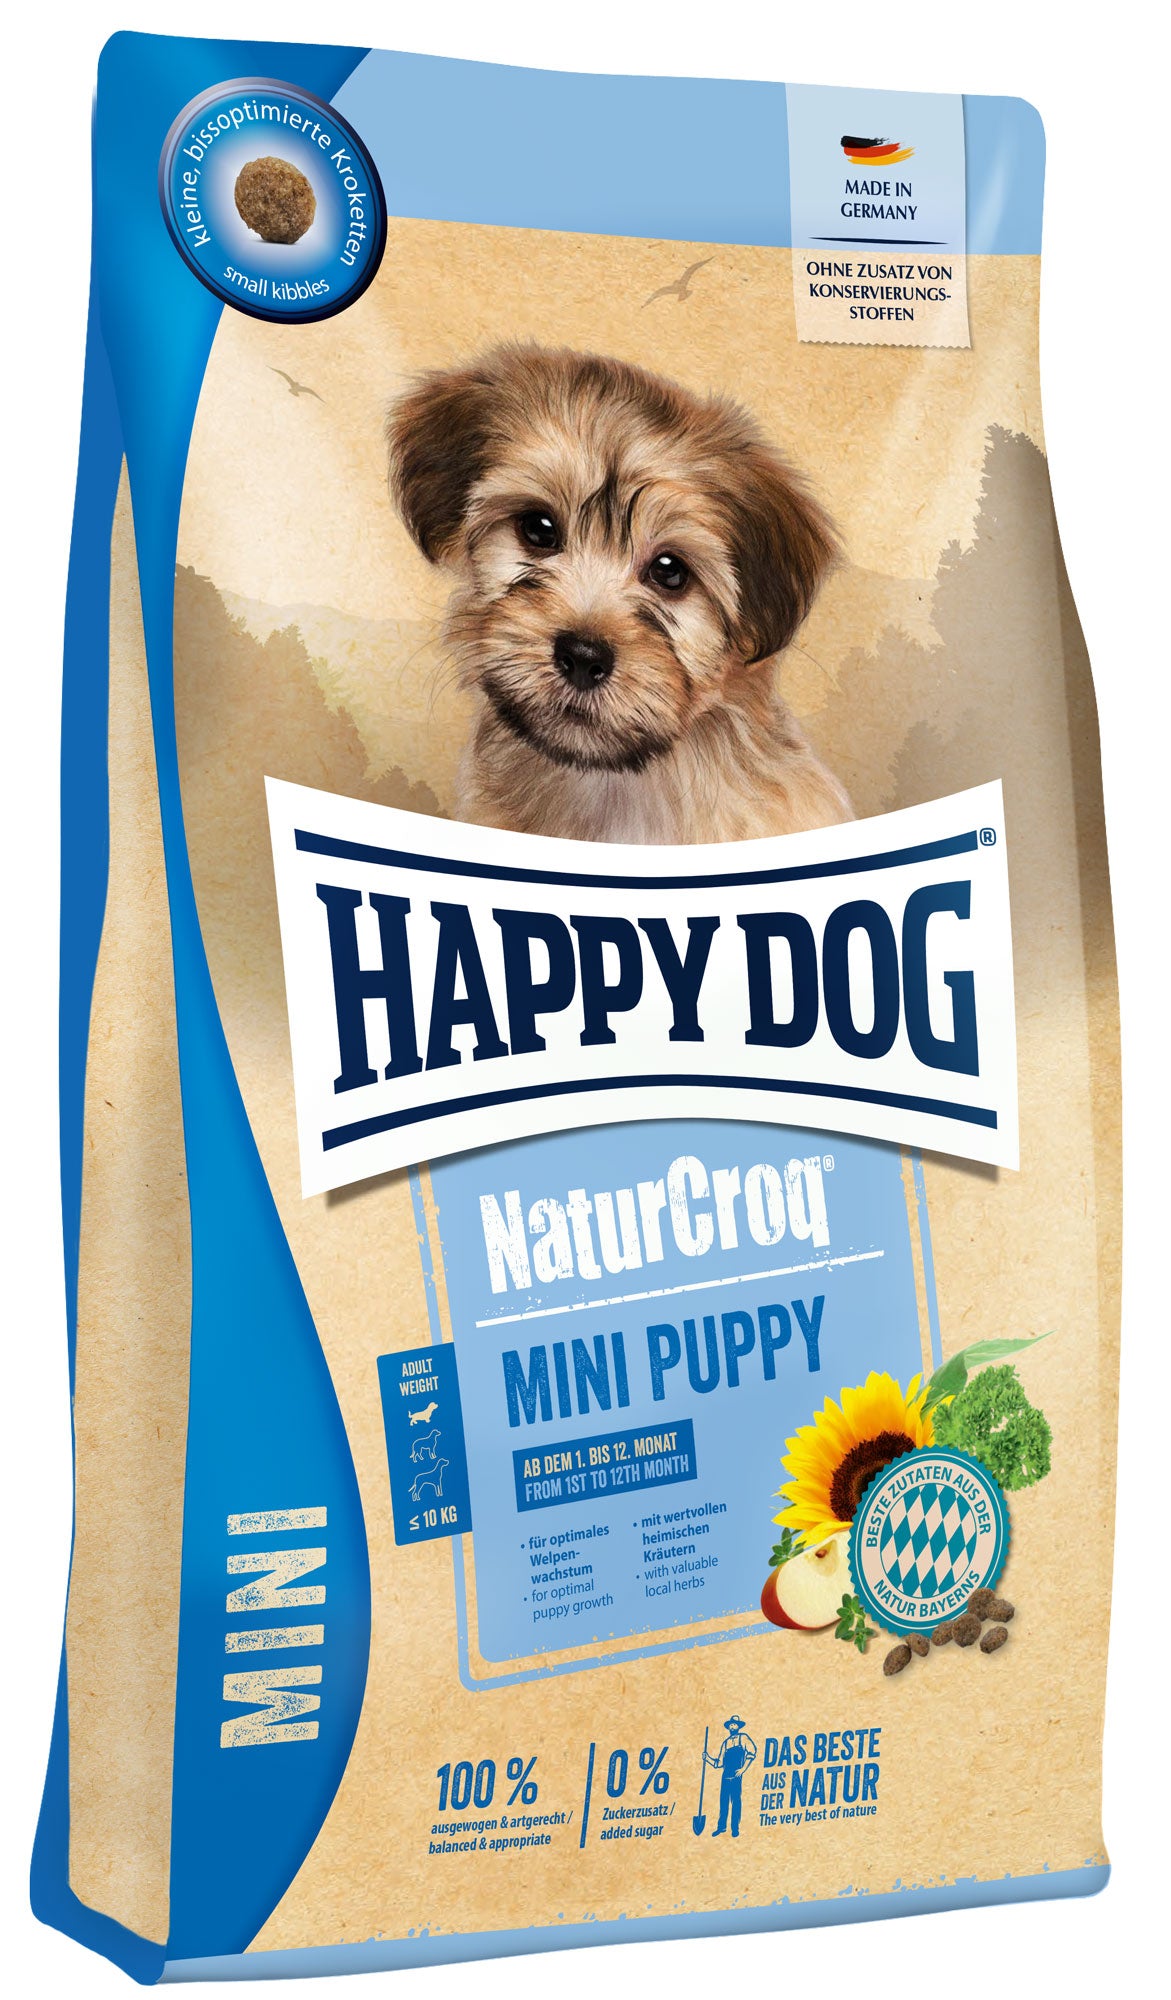 NC MIni Puppy Dog Food